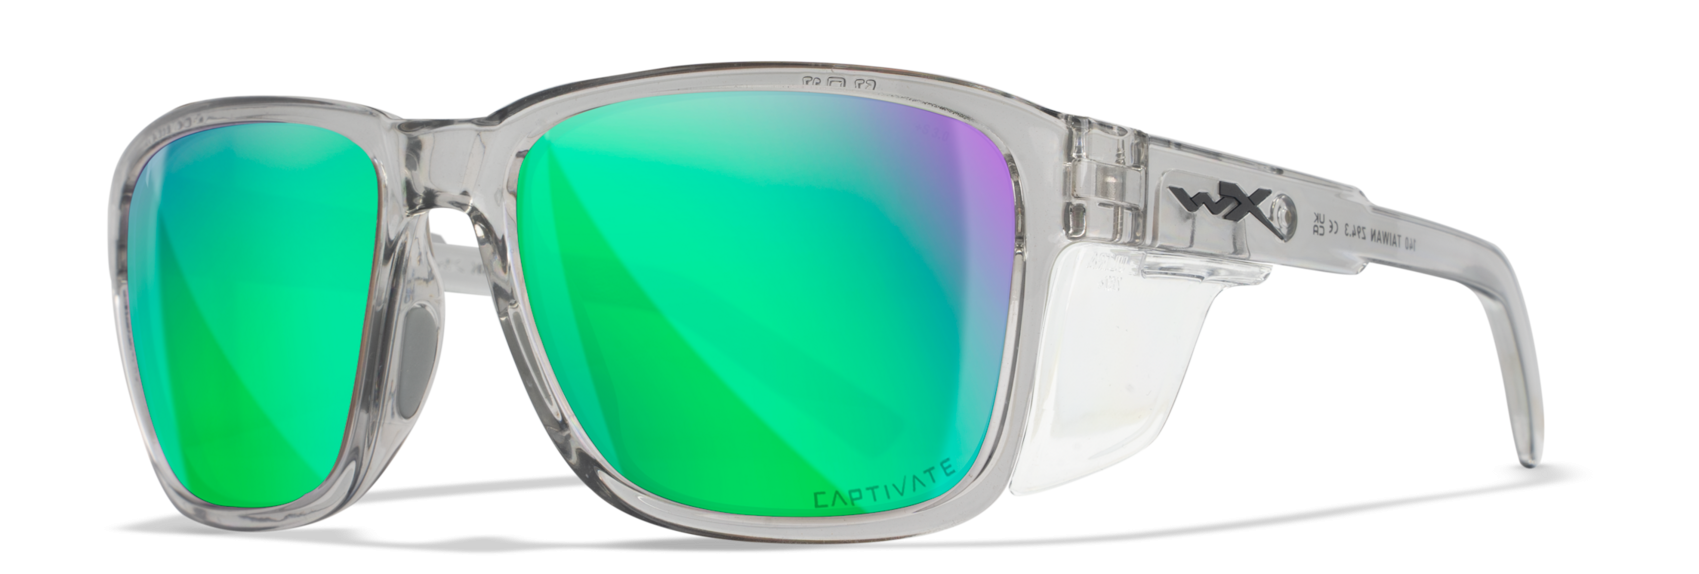 Wiley-X WX Trek Sunglasses